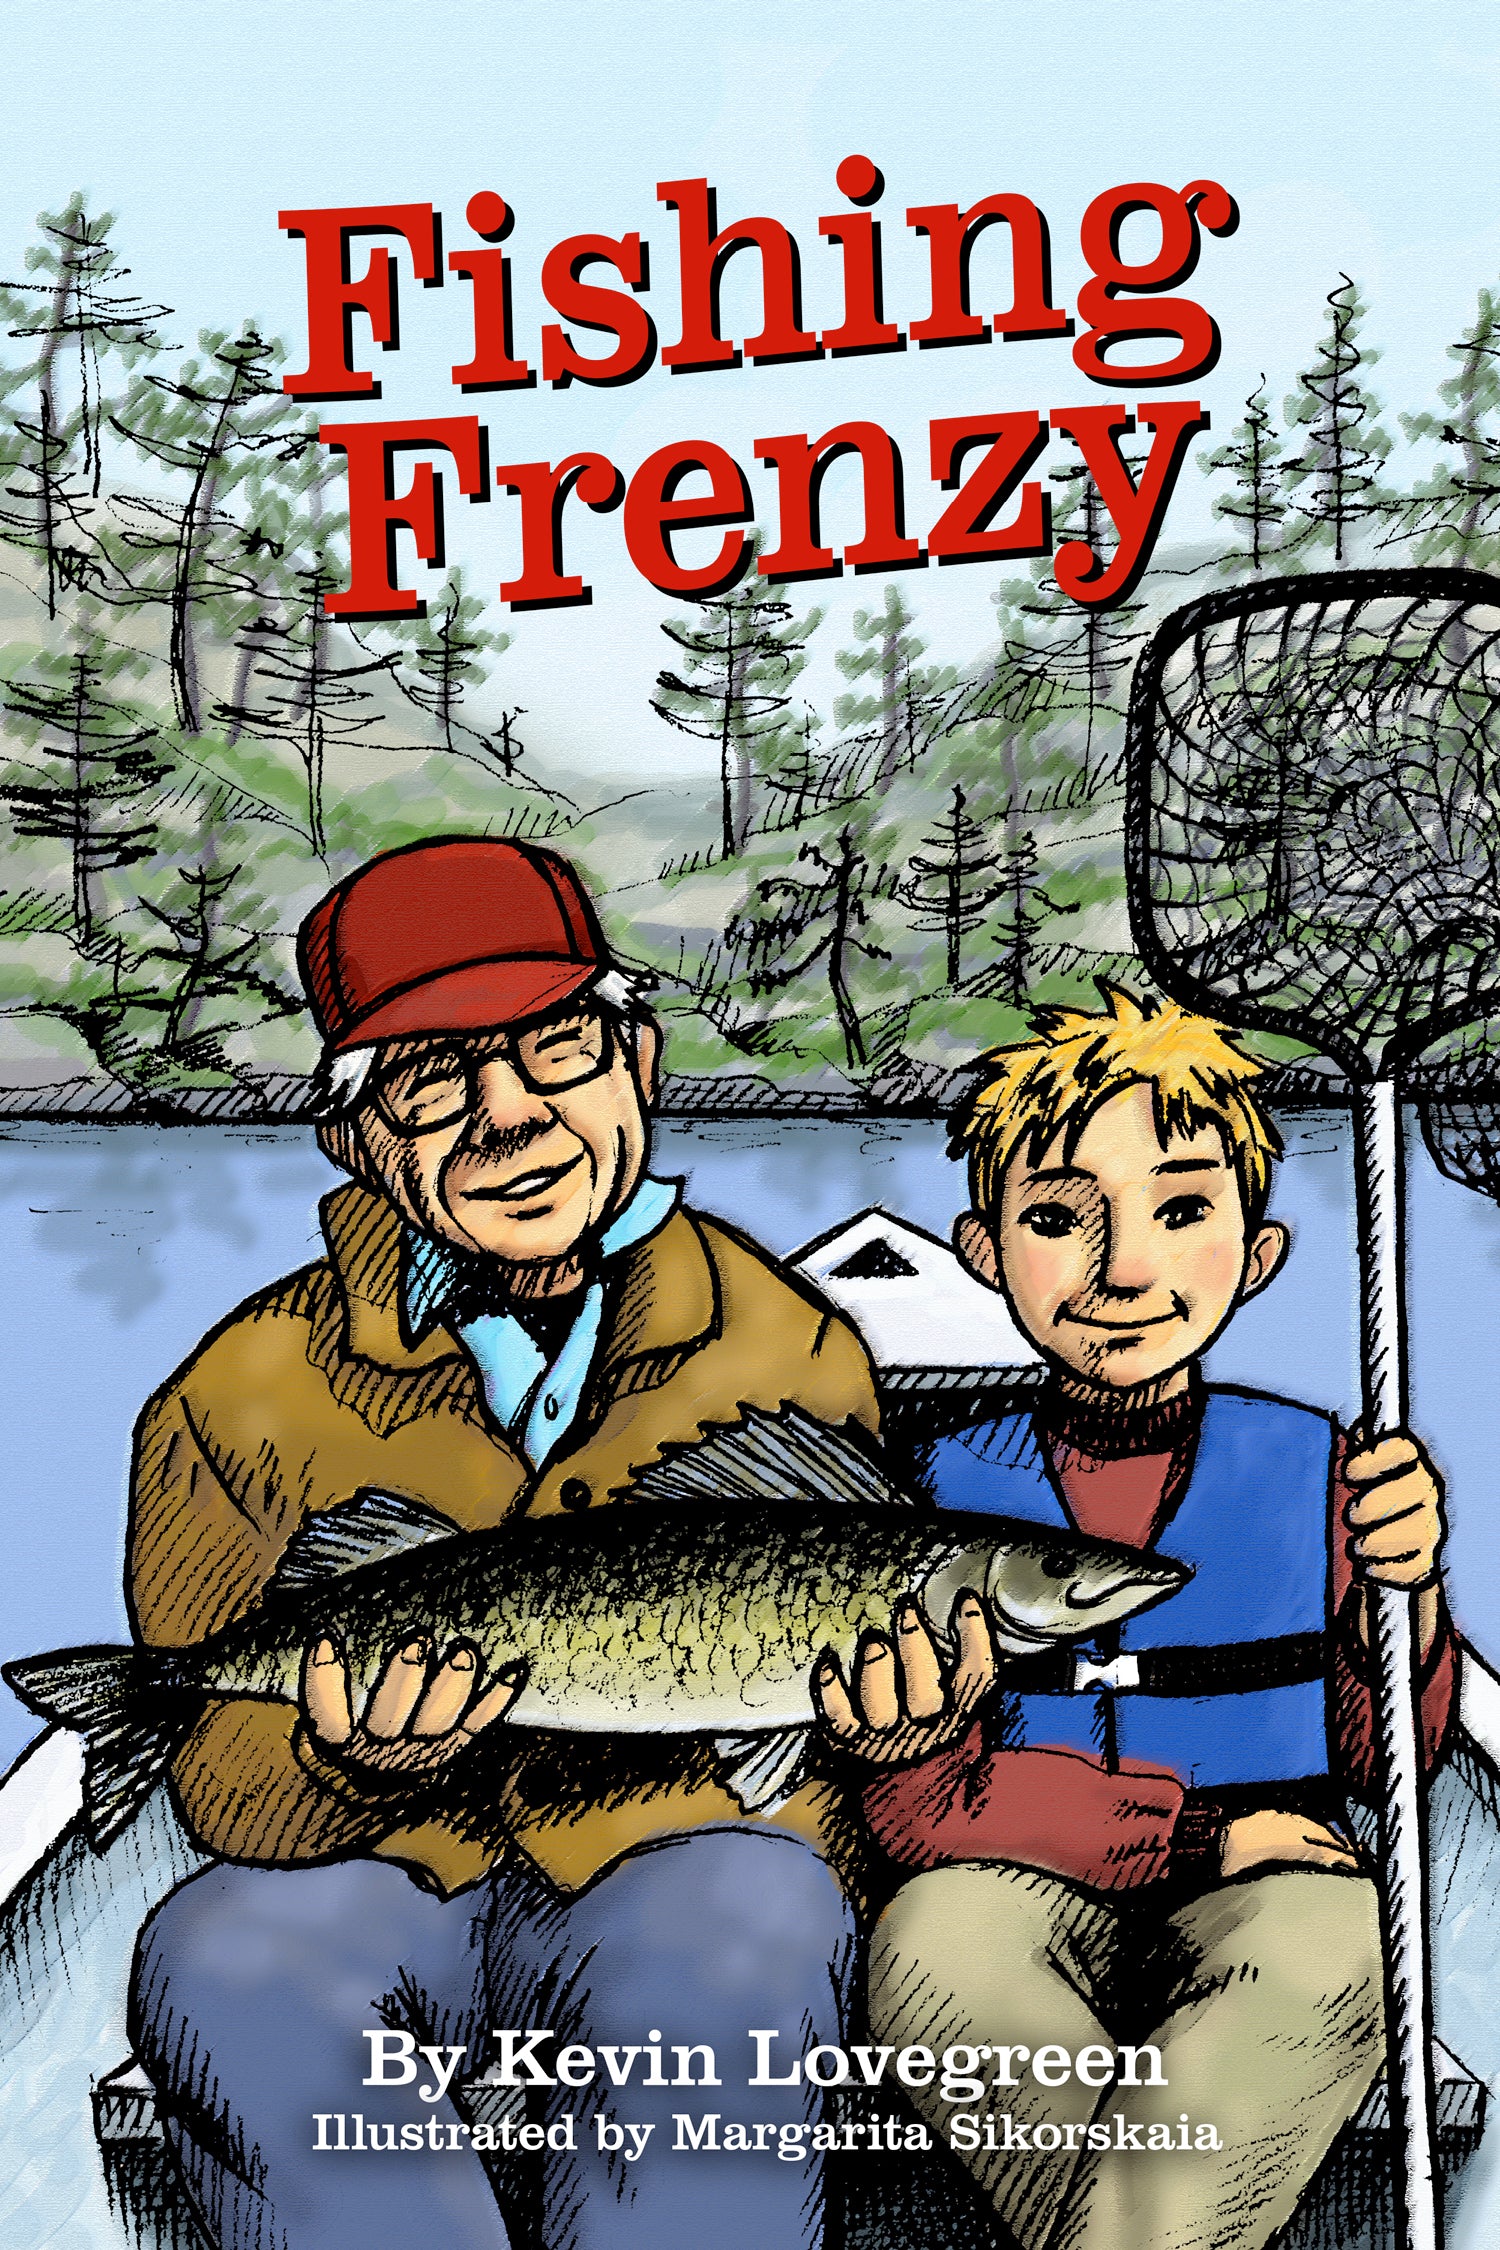 8 Books That Can Make You a Better Walleye Fisherman